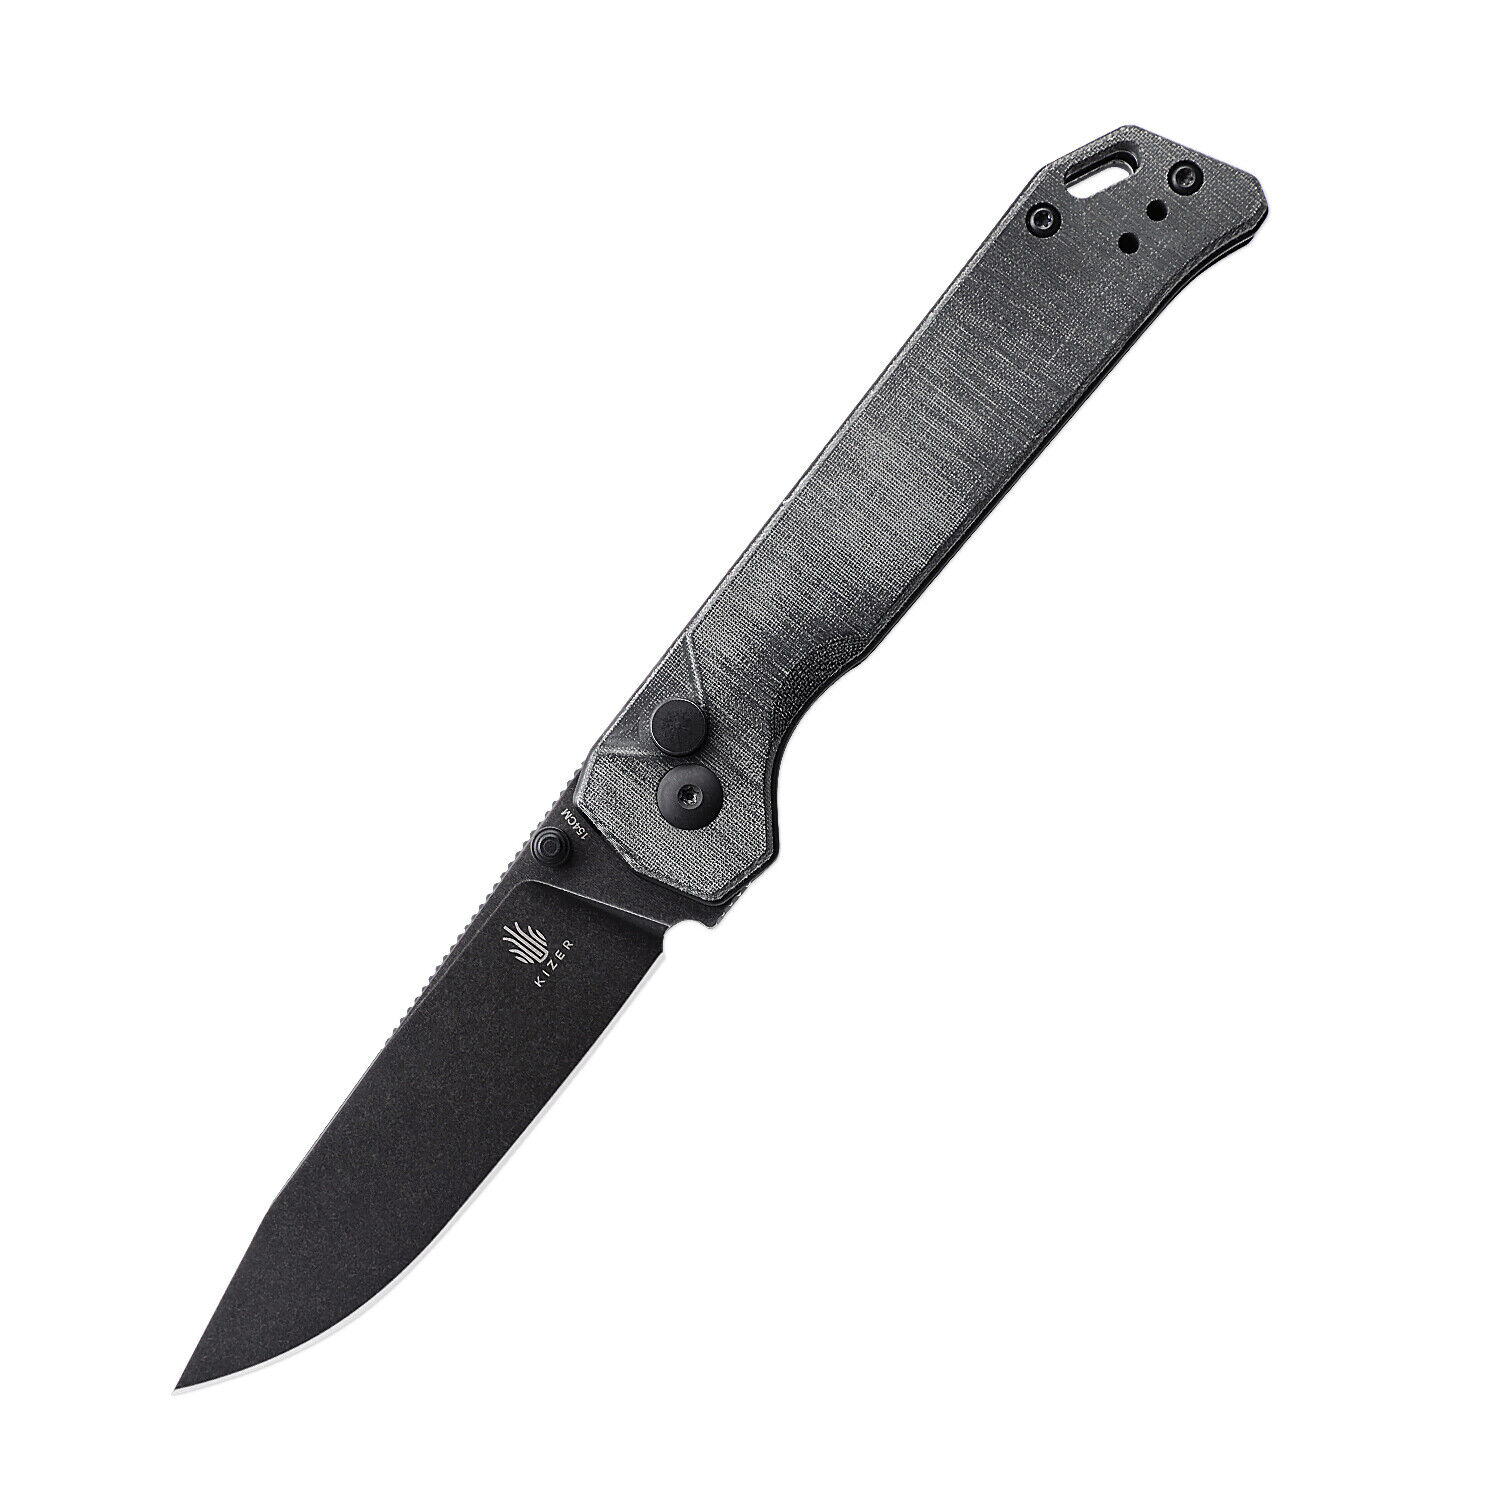 Kizer Begleiter 2 EDC Pocket Knife Black Micarta Handle 154CM Steel V4458.2BC2